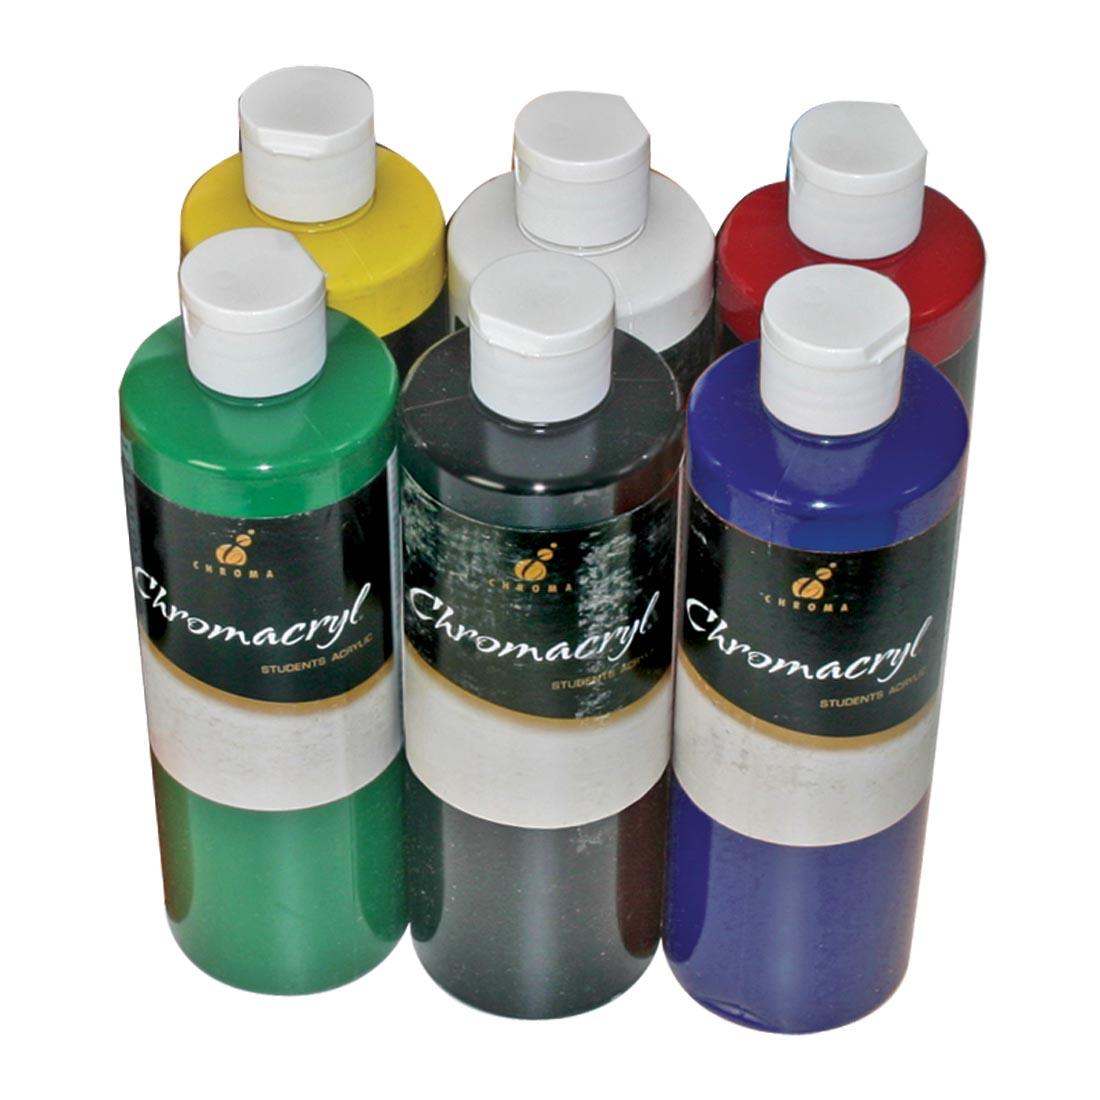 Chromacryl Students' Acrylic 6-Color Primary Set